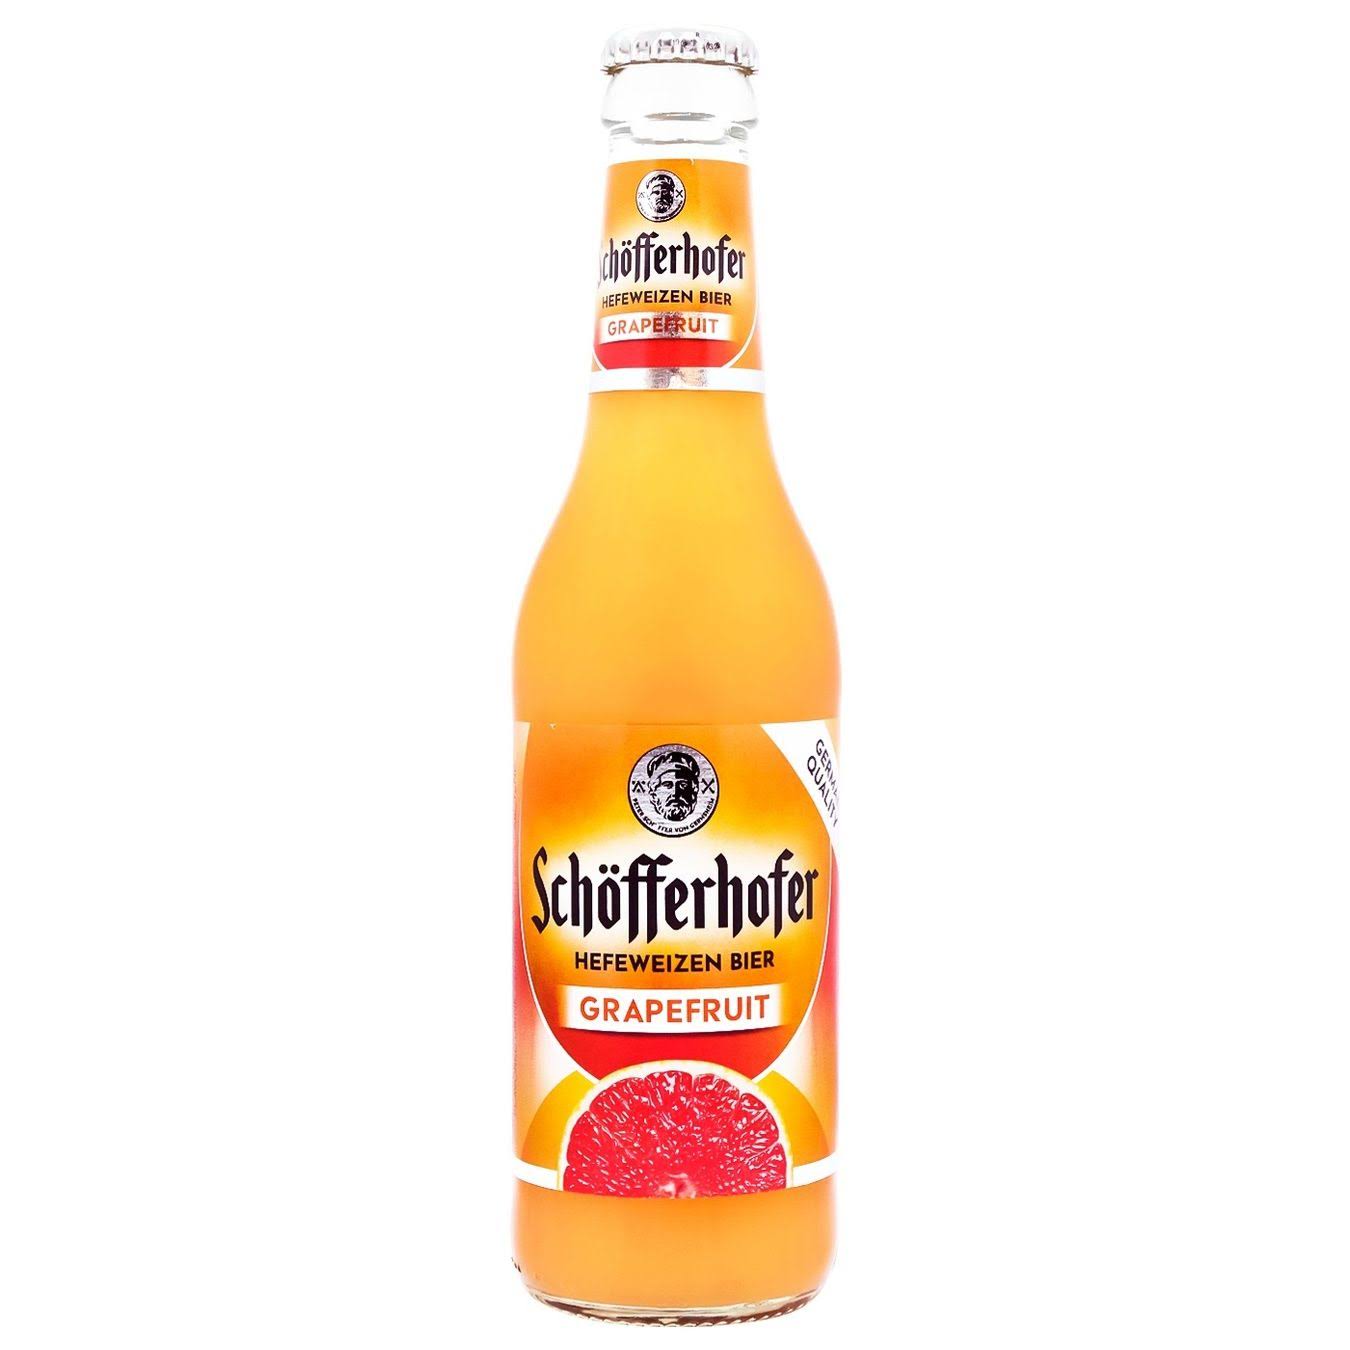 Schofferhofer Grapefruit Beer - 12 fl oz bottle